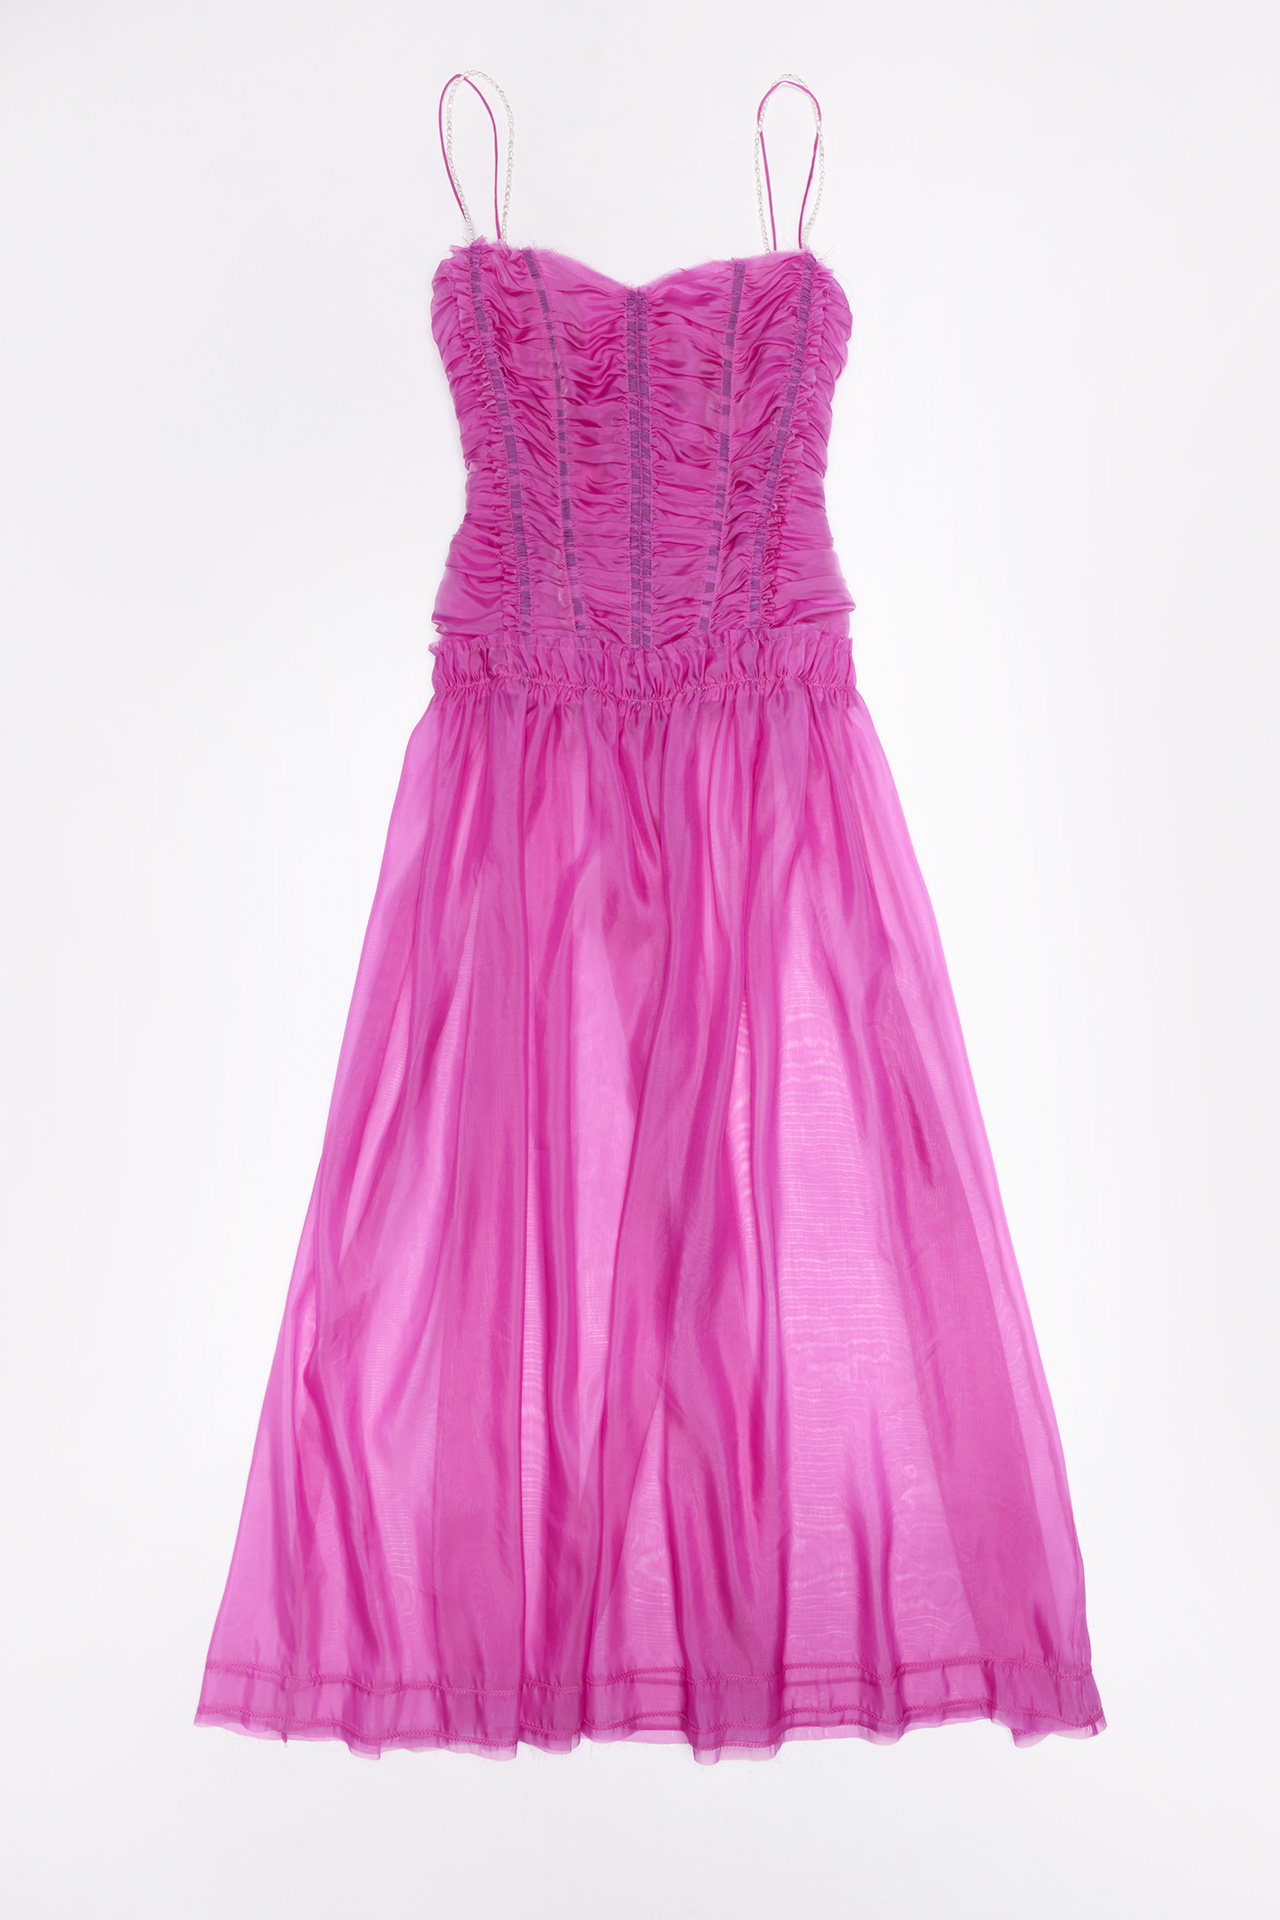 Dress Franca Europe | Made Pink Spain Miista in |